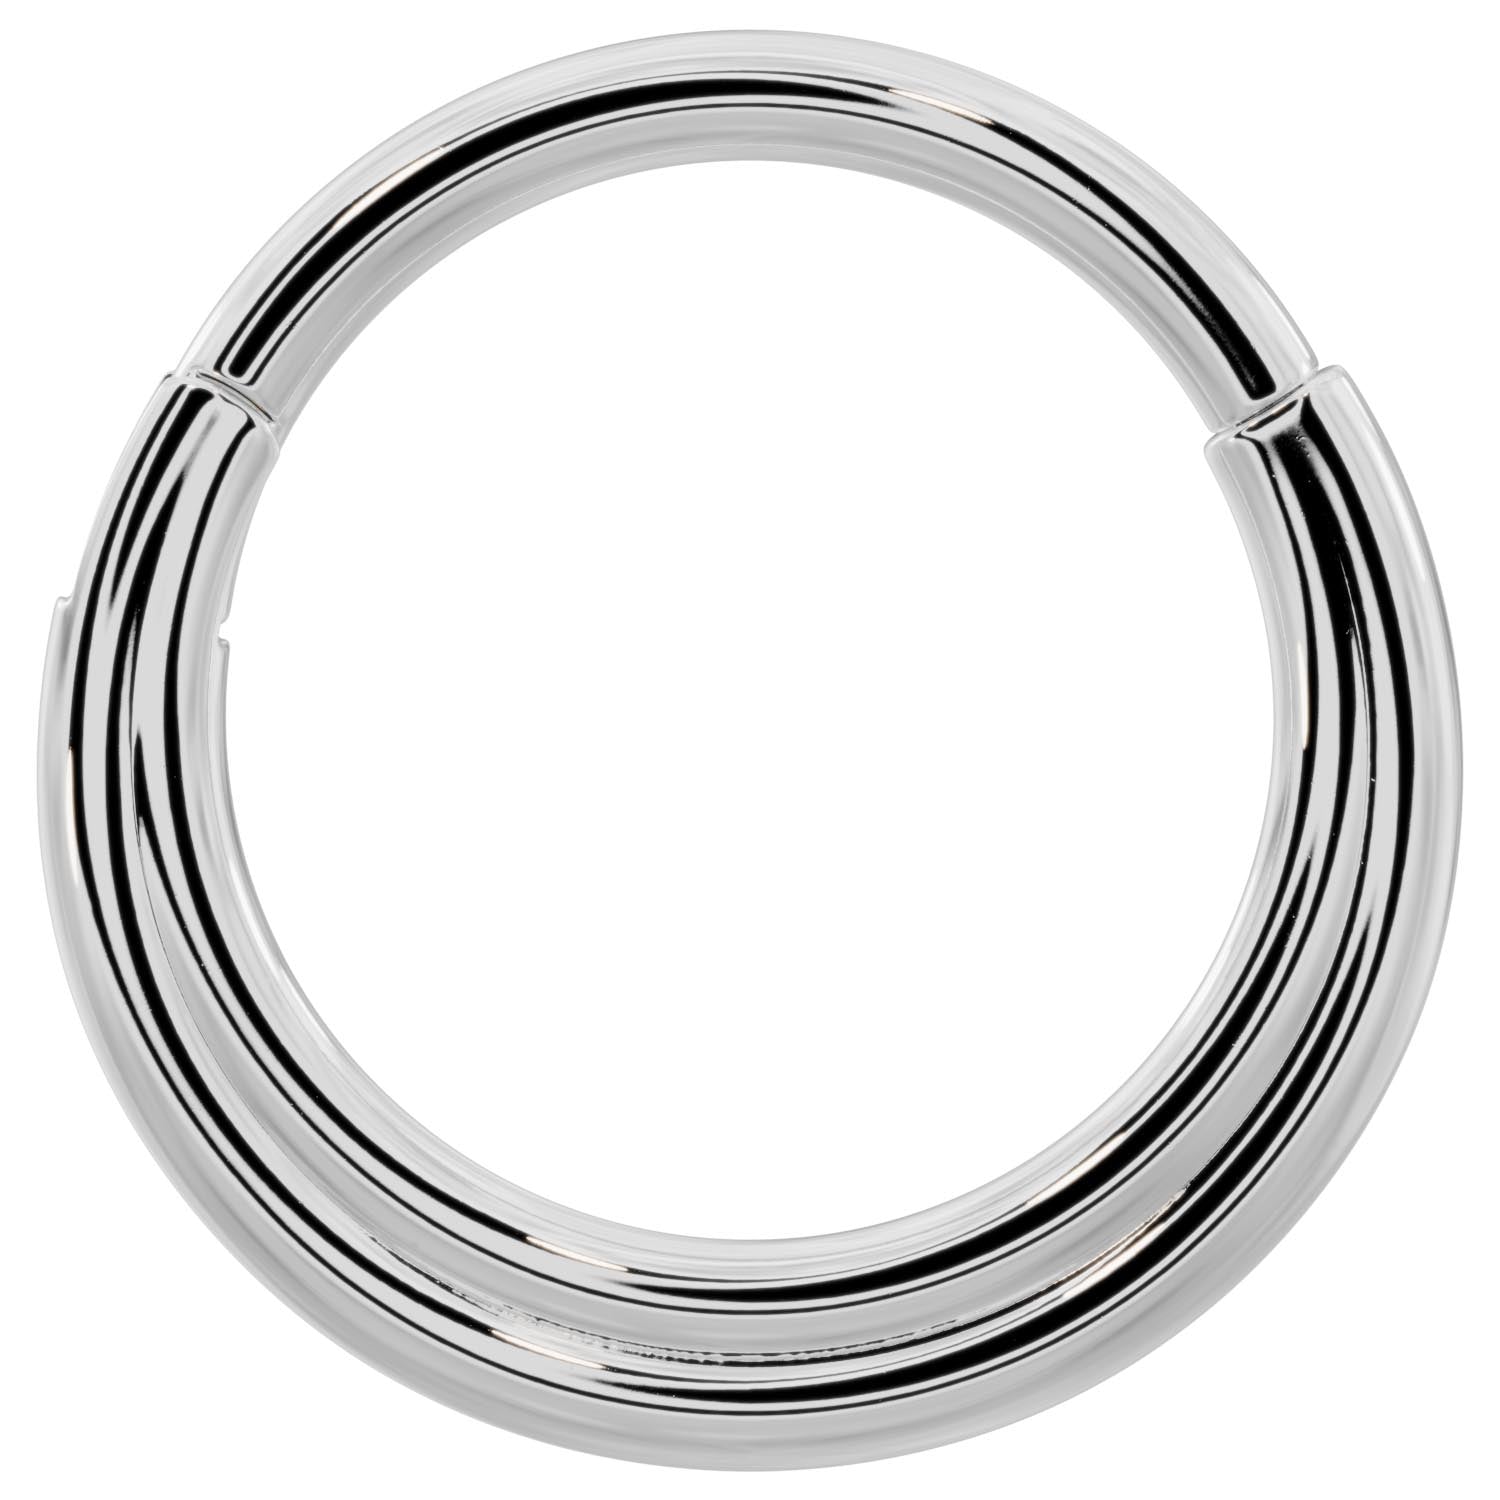 Two Band Eternity 14k Gold Clicker Ring Hoop-14K White Gold   14G (1.6mm)   5 8